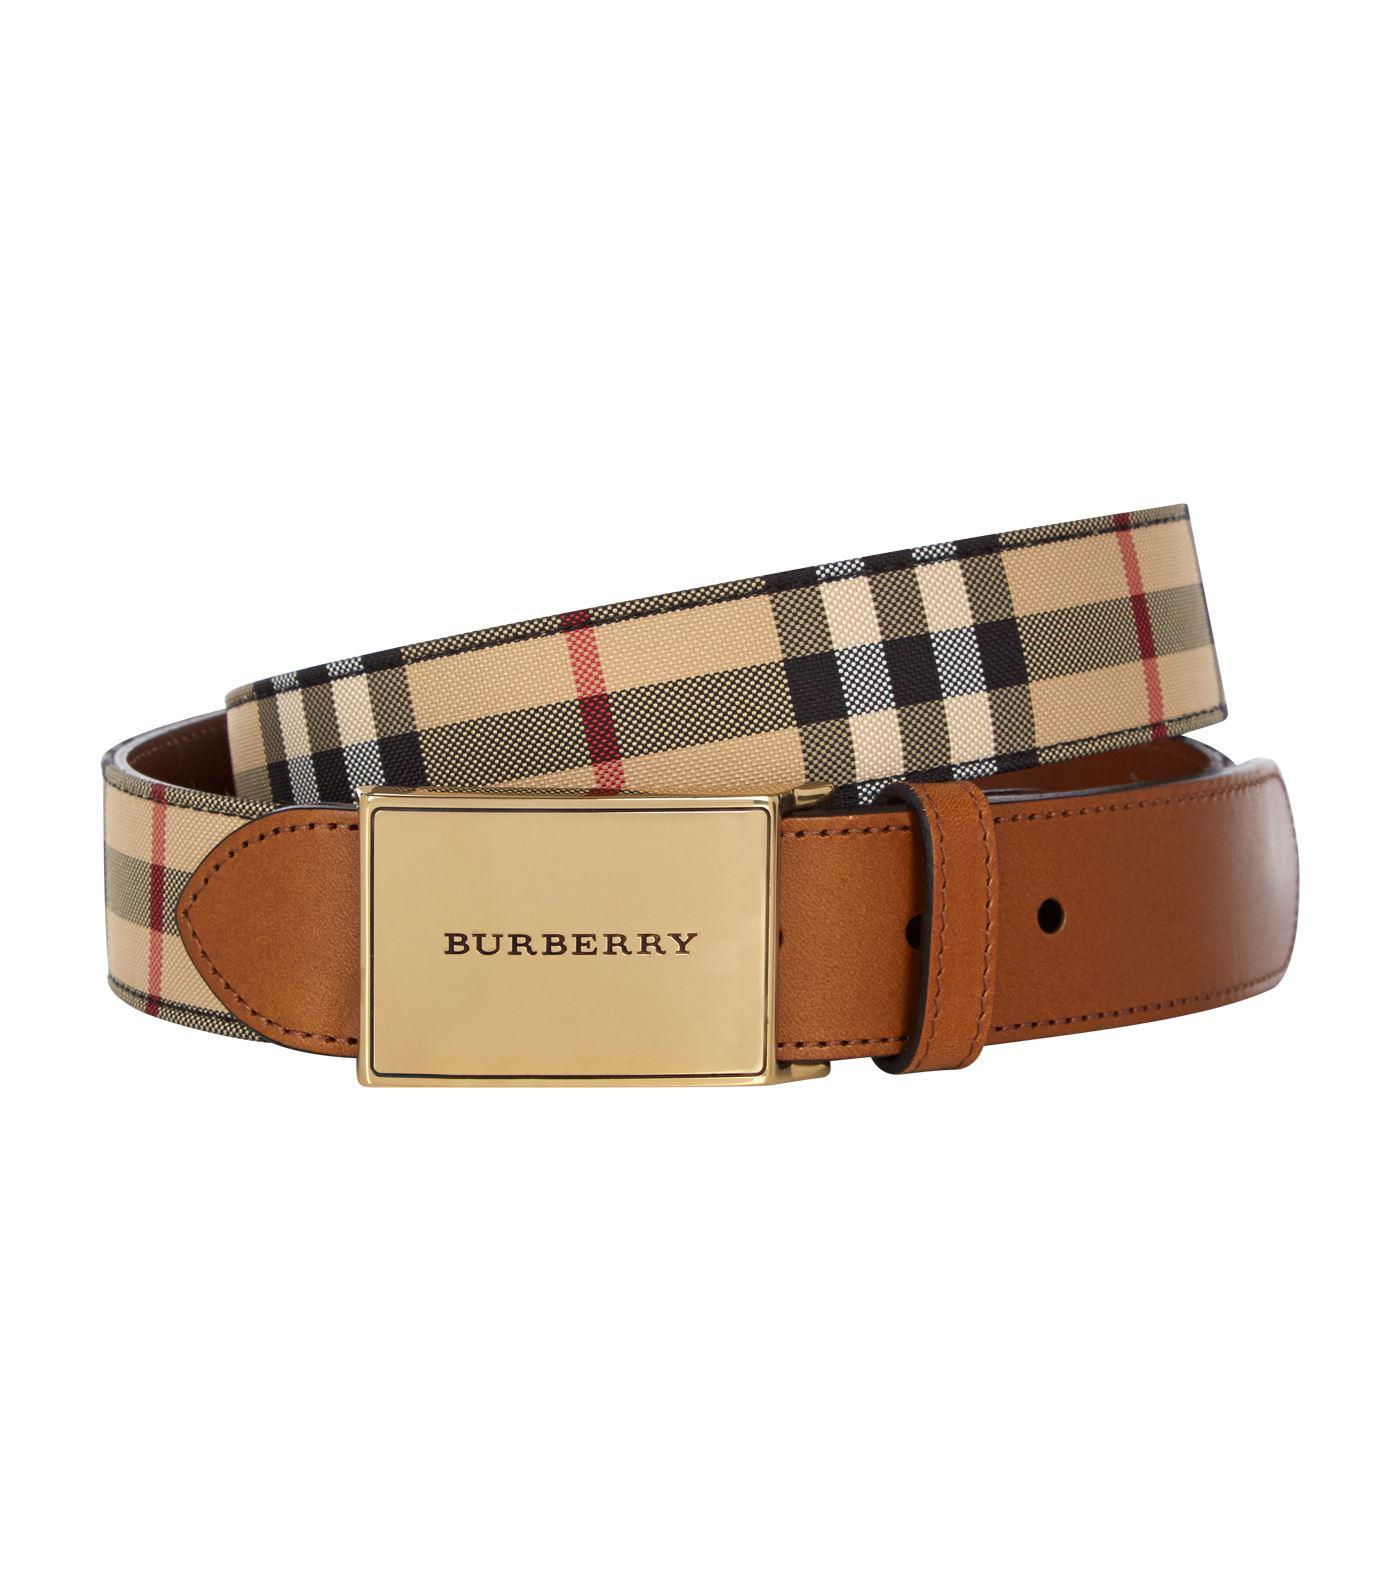 Burberry Gold Plaque Buckle Vintage Check Leather Belt Size 42 US/105